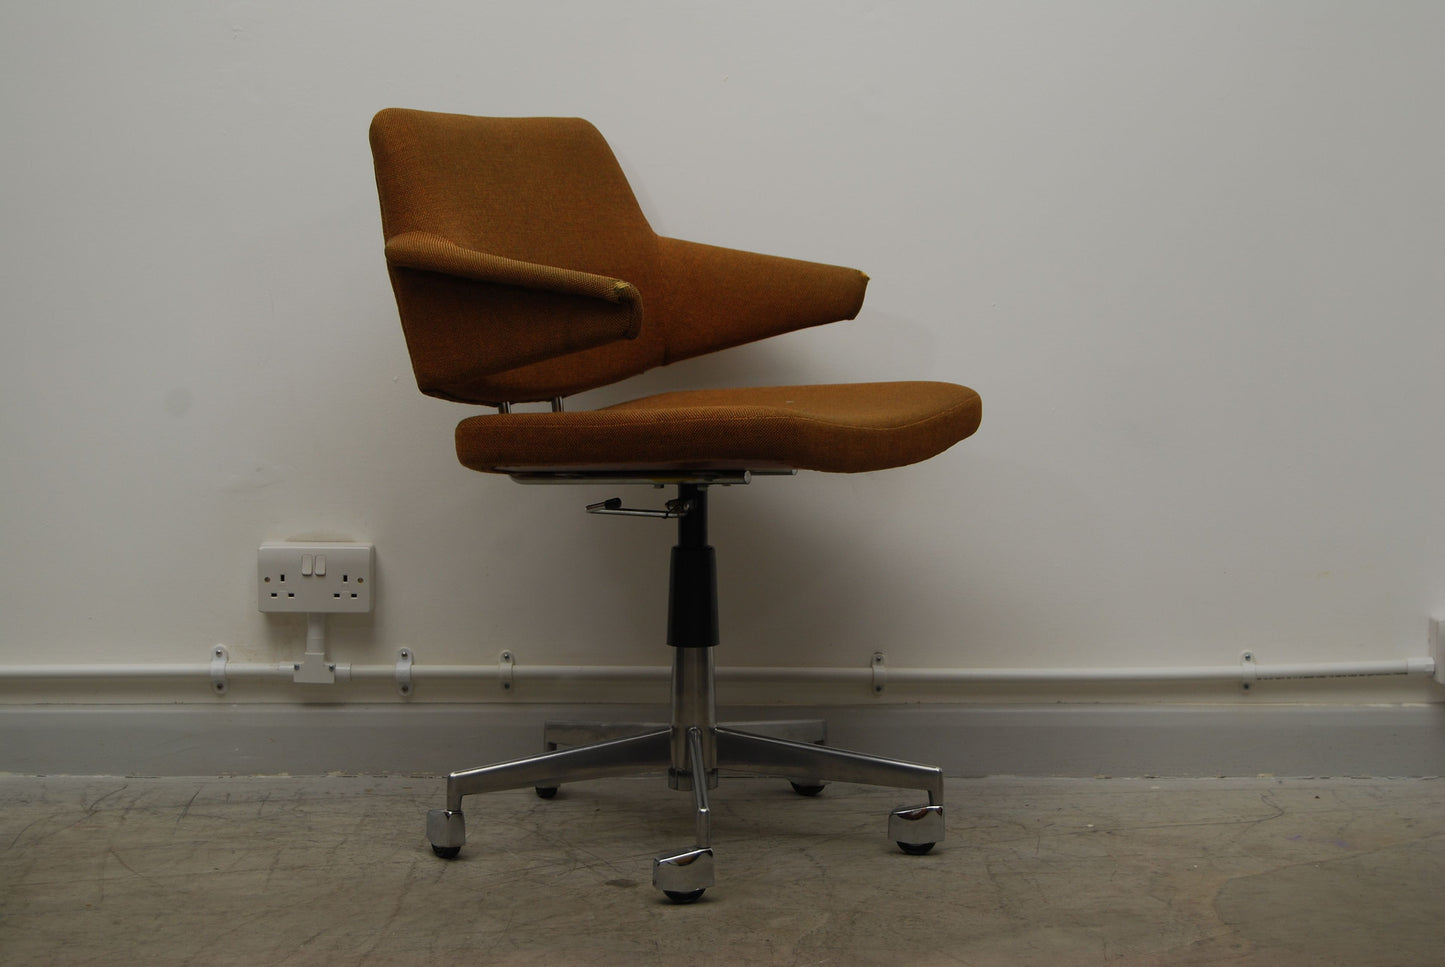 Desk chair by Lafala no. 2